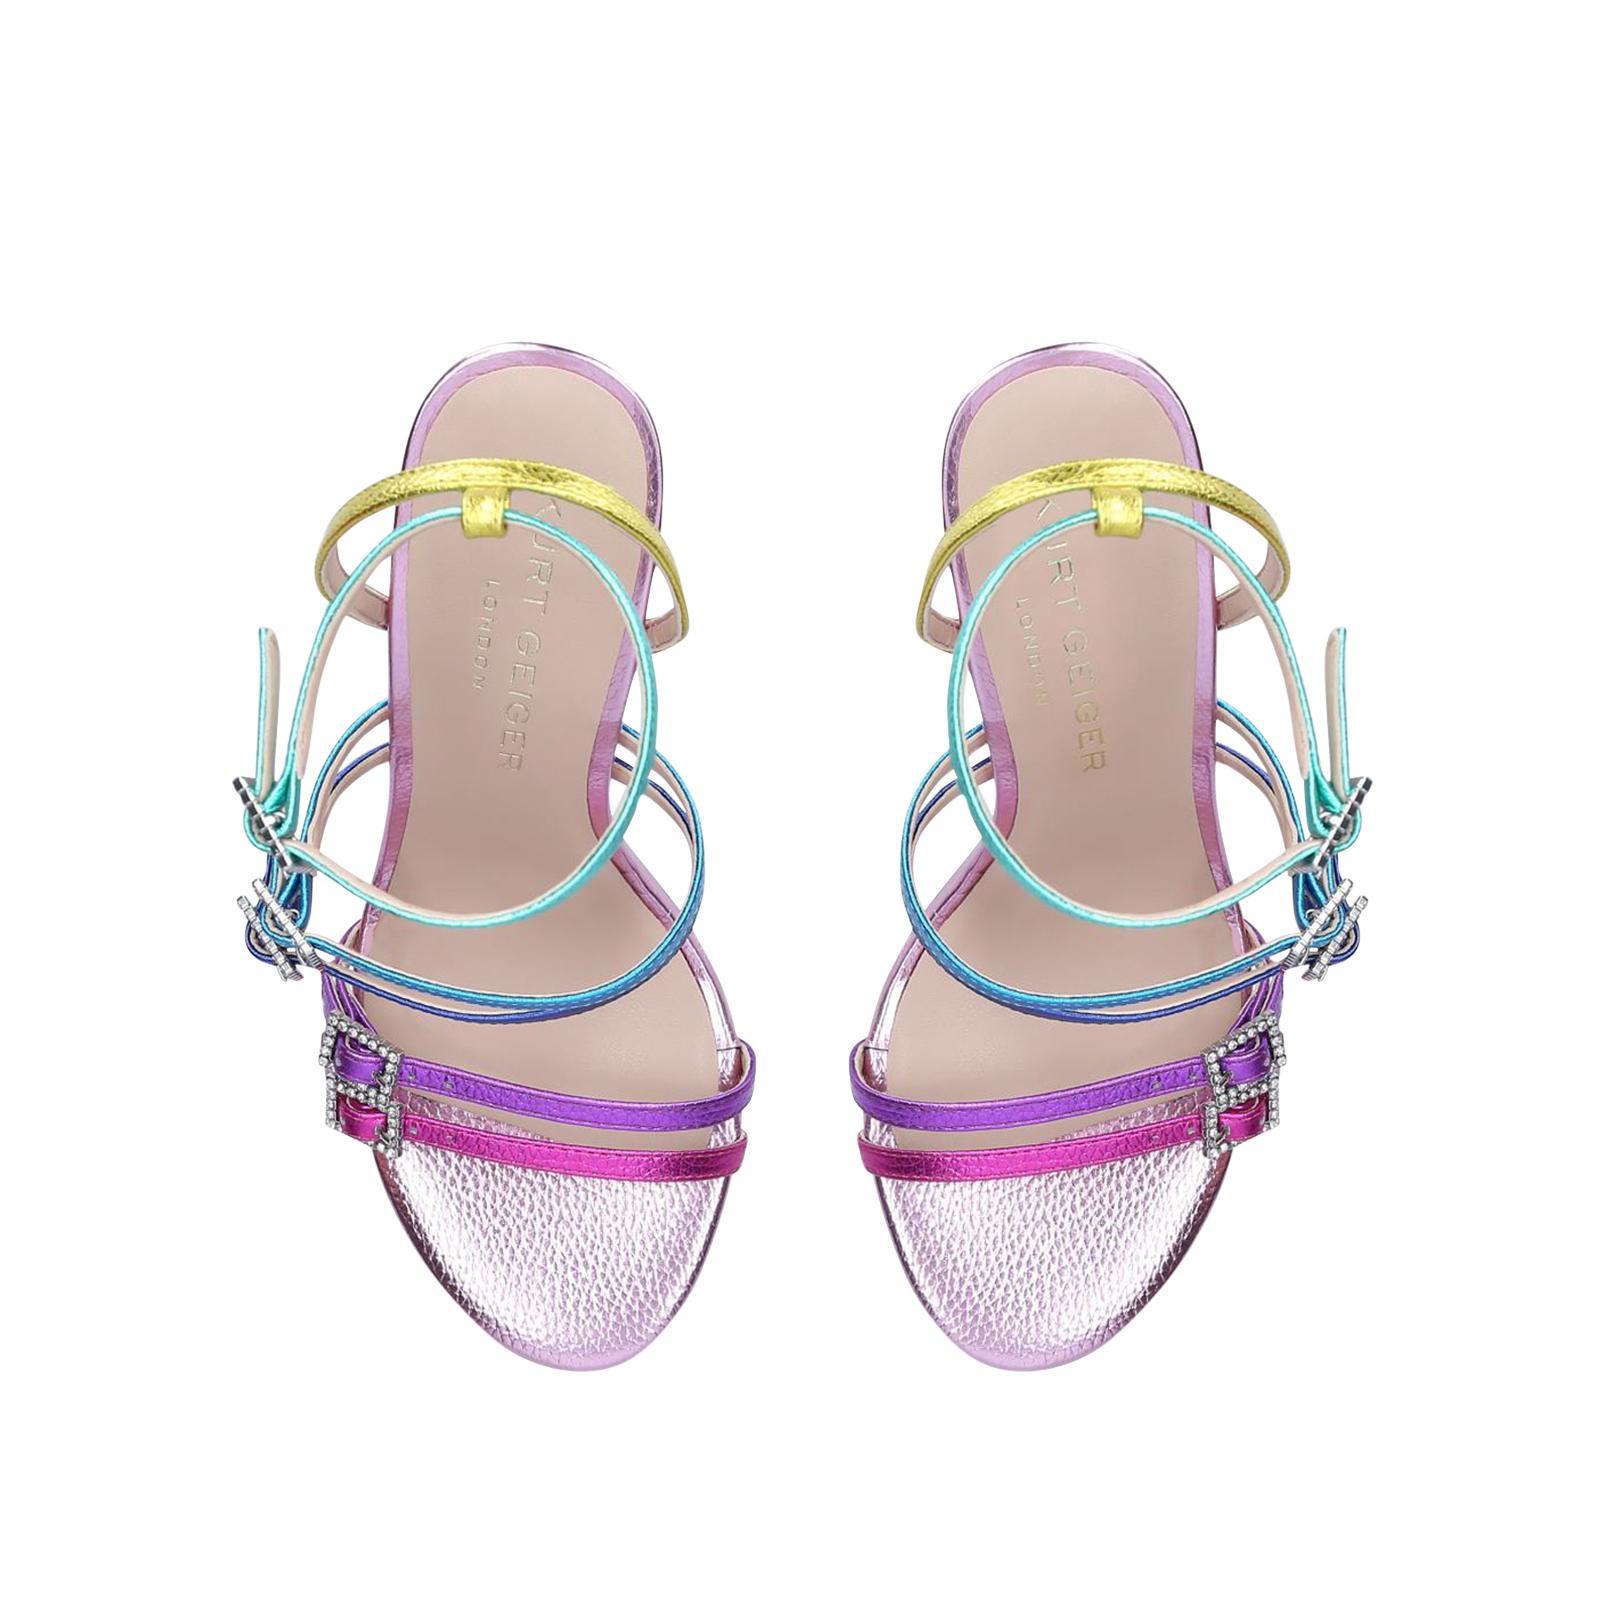 PIERRA Rainbow Leather Buckled Stiletto Heel Strappy Sandals by 